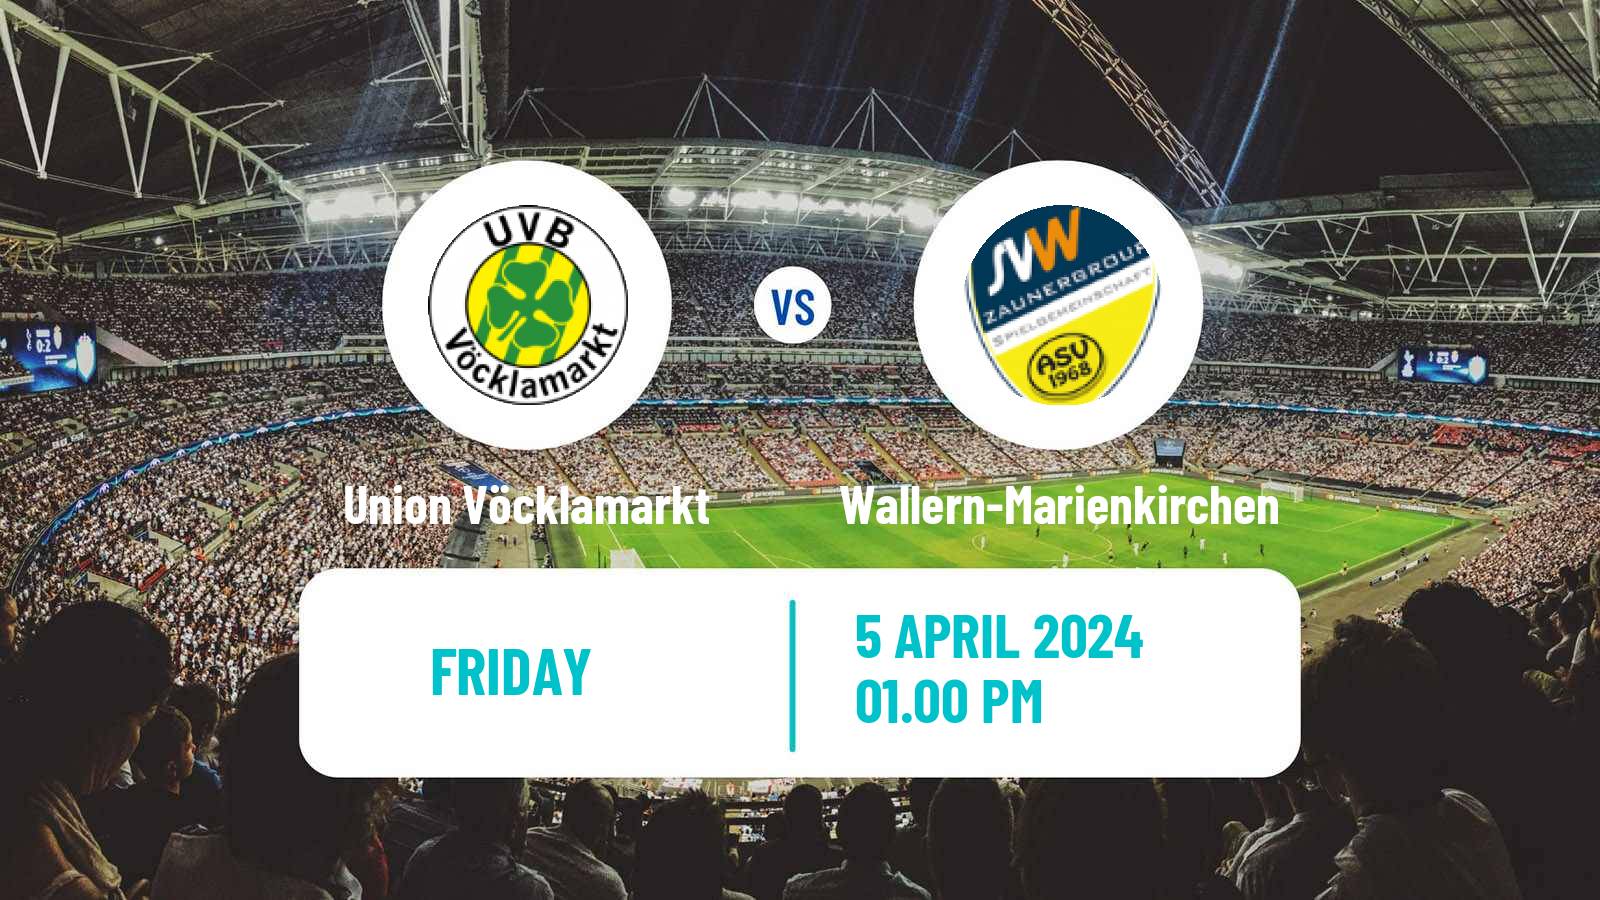 Soccer Austrian Regionalliga Central Union Vöcklamarkt - Wallern-Marienkirchen